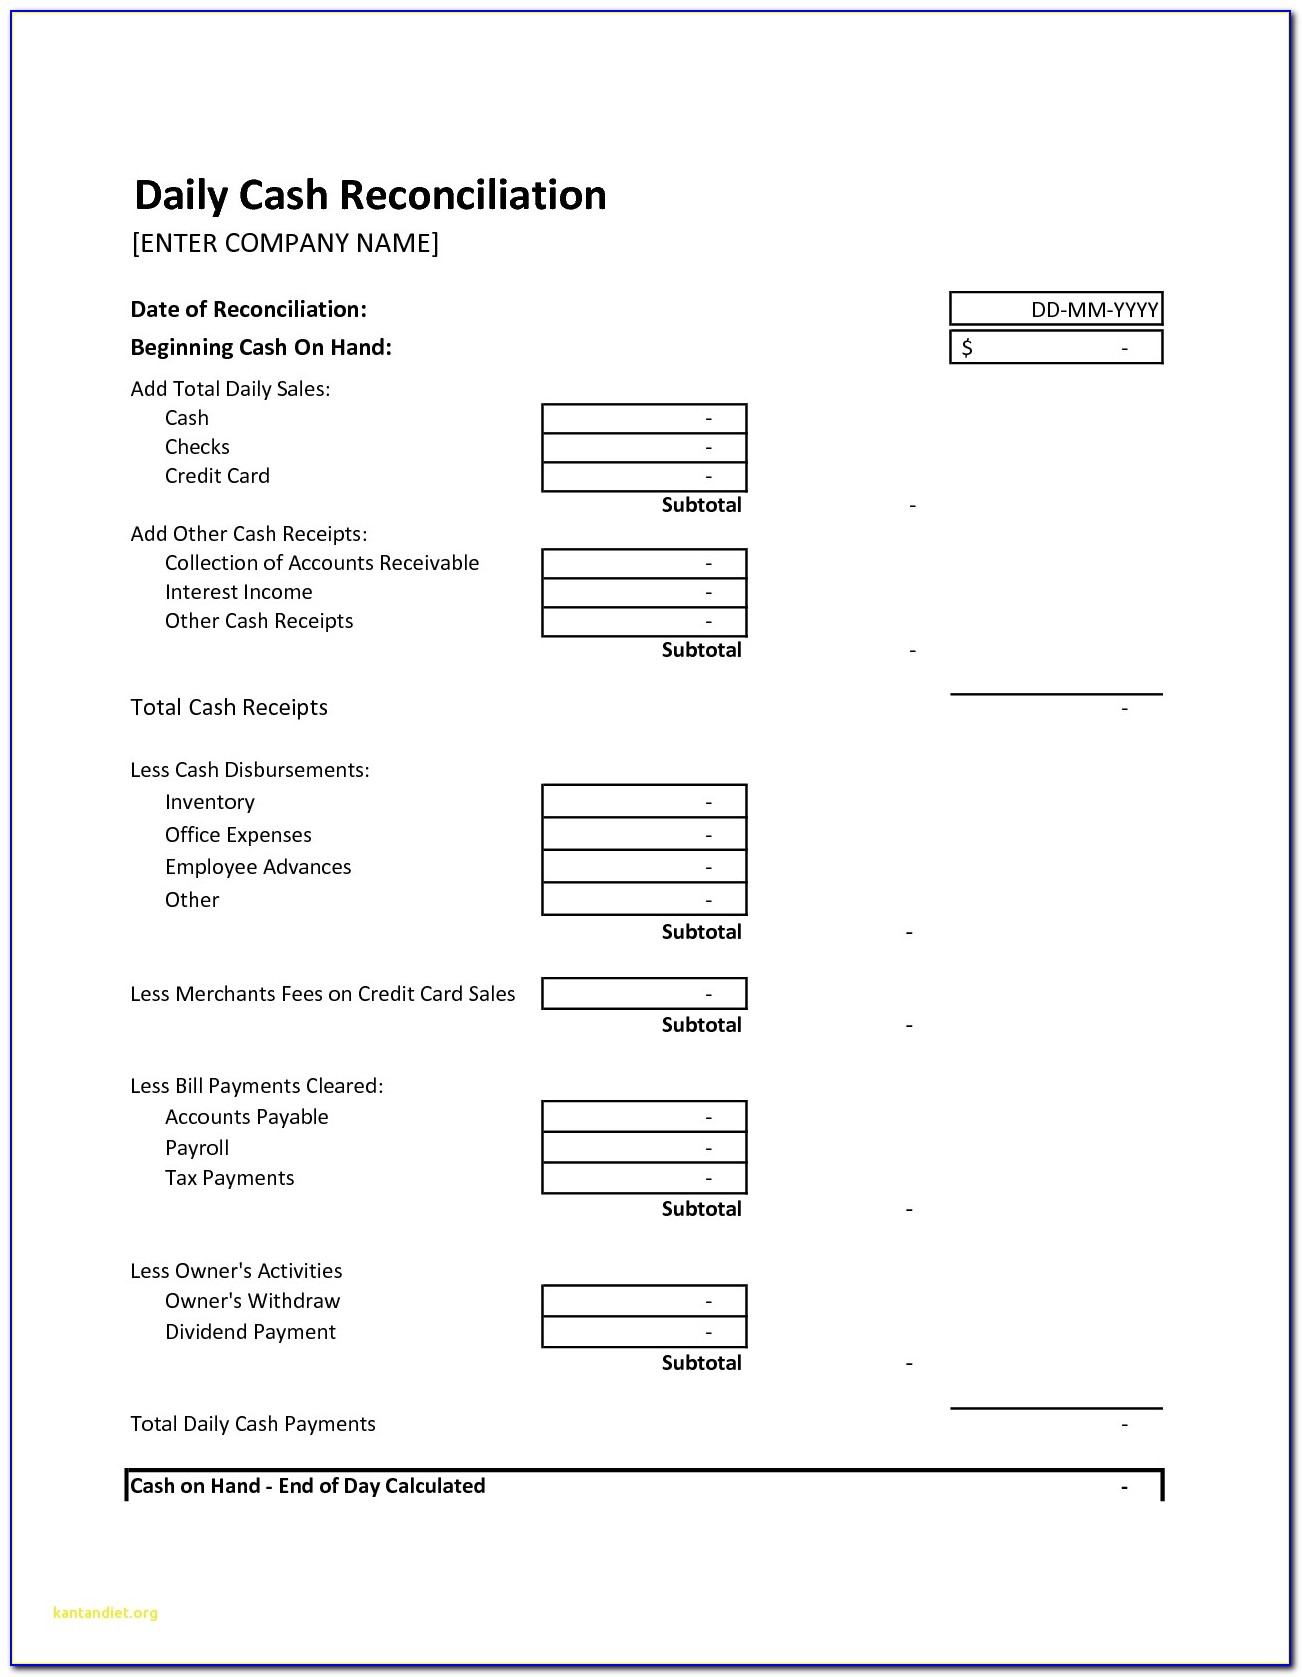 Daily Cash Box Reconciliation Form